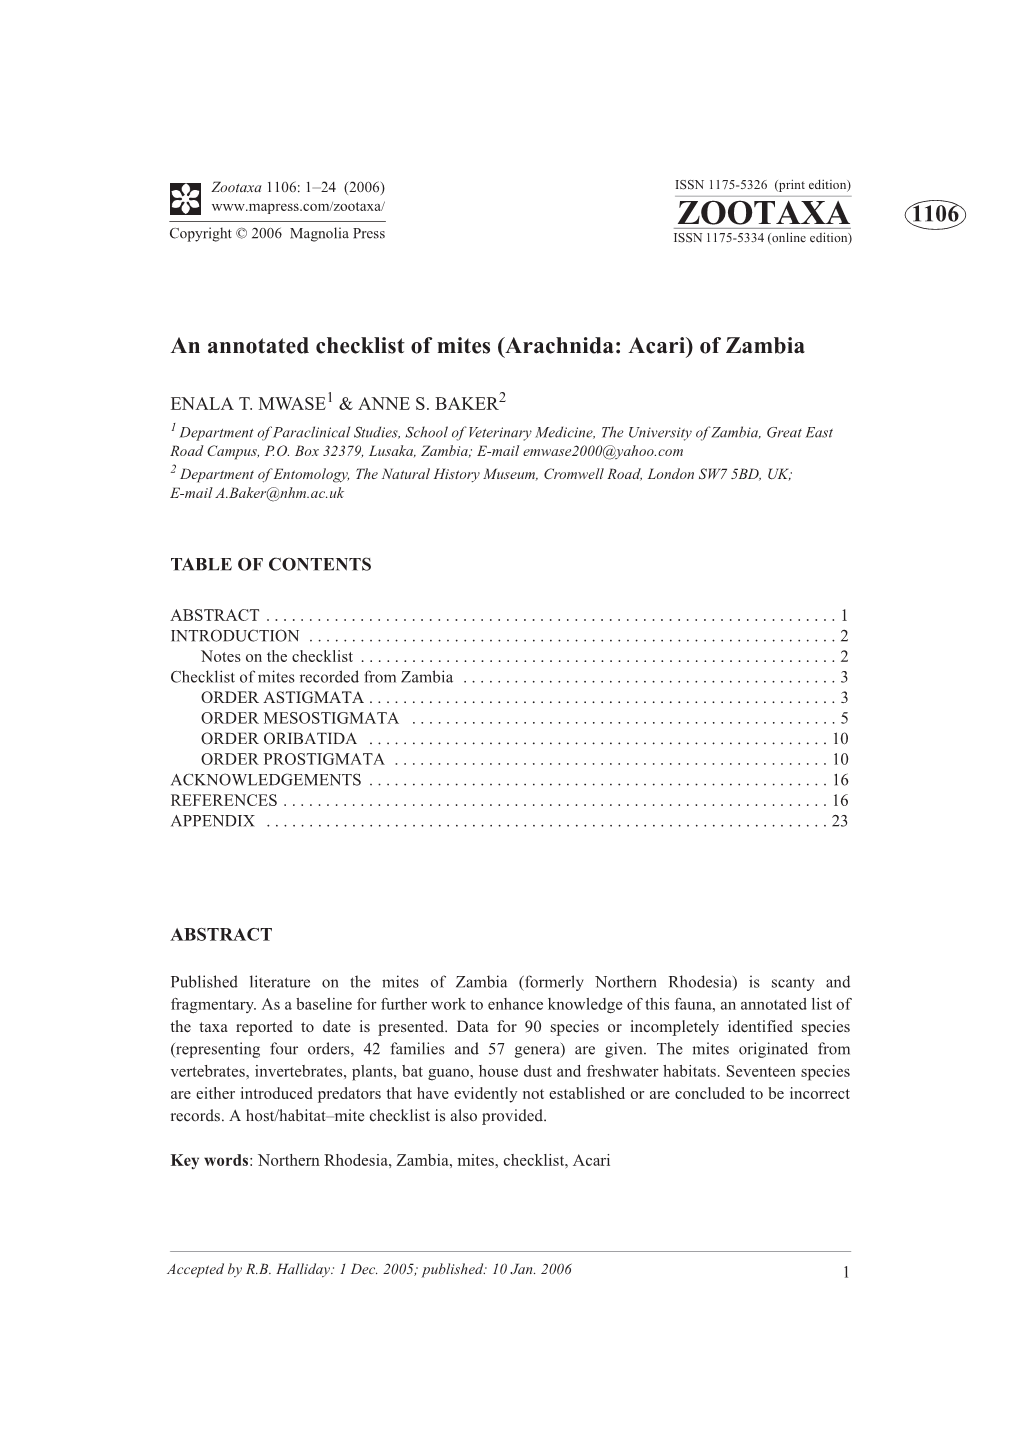 Zootaxa, Checklist of Mites (Arachnida: Acari)